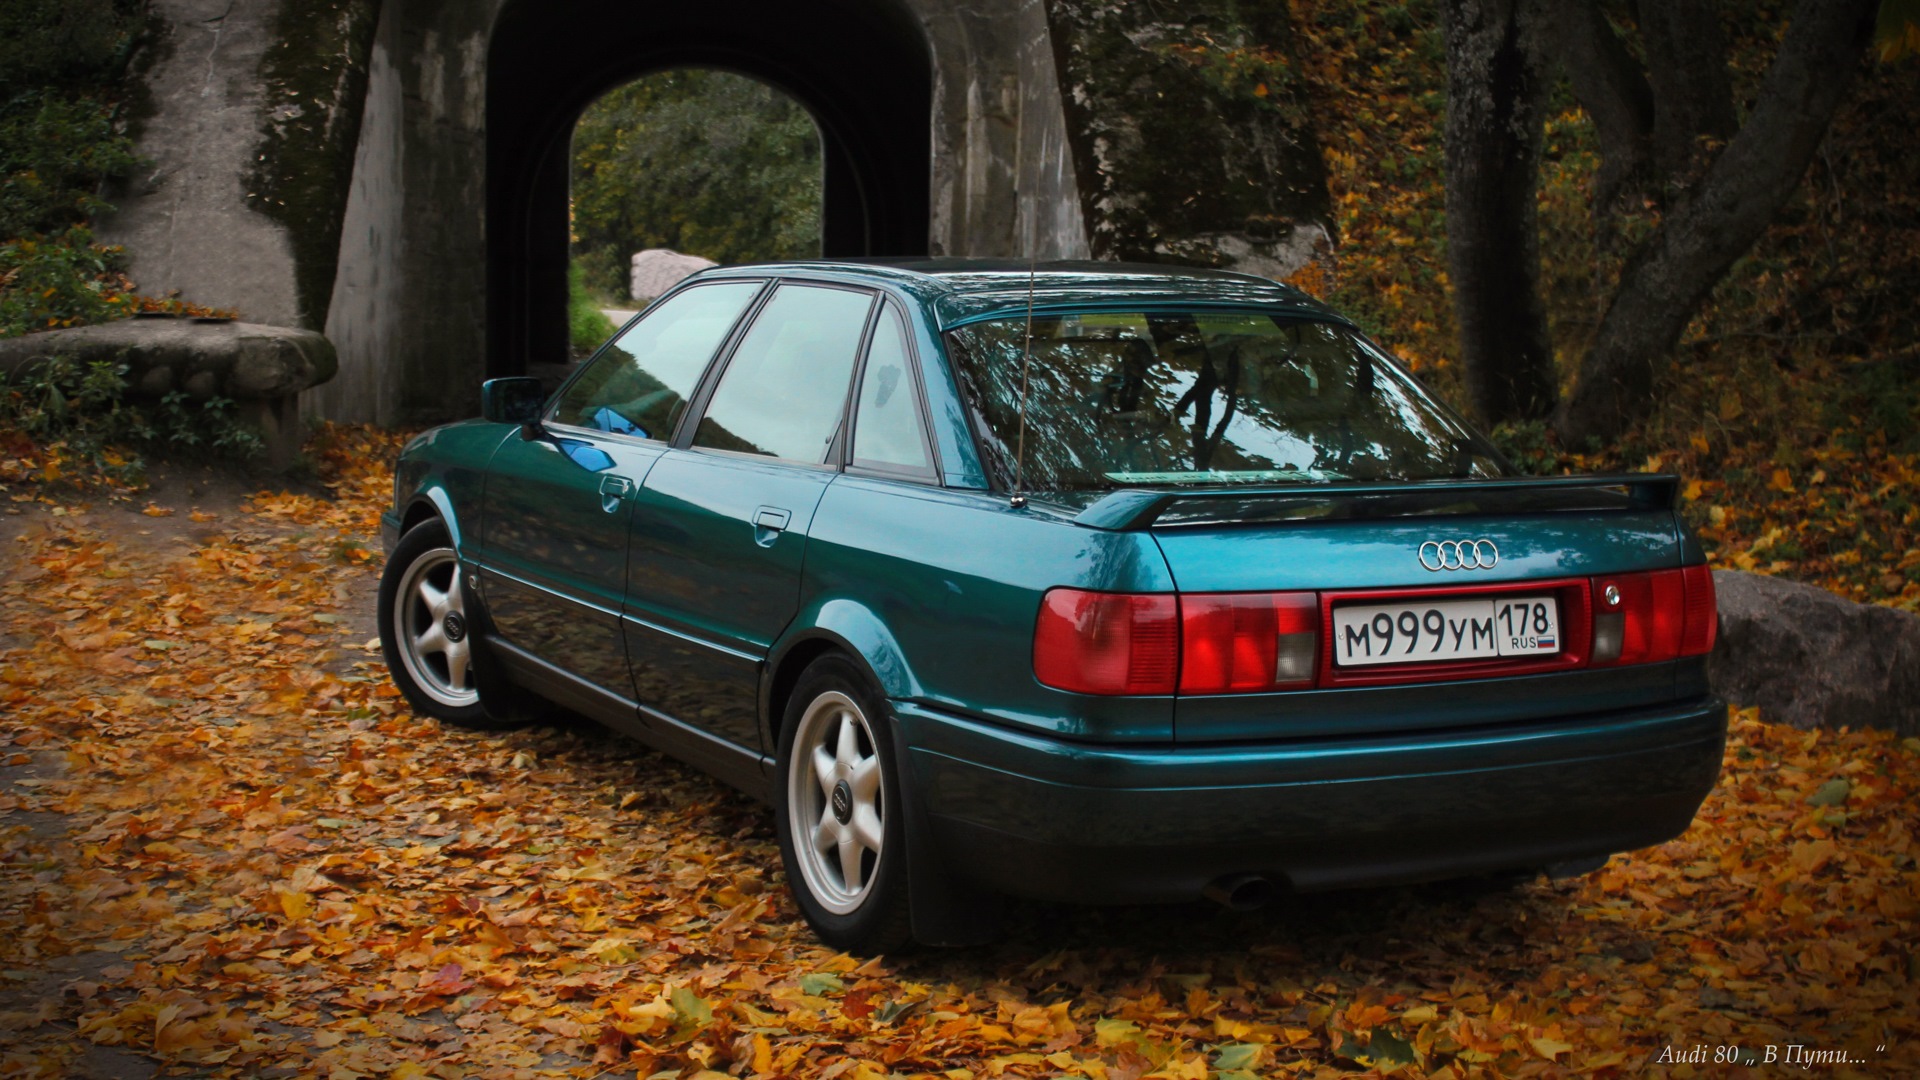 Audi 80 b4 s2. Ауди 80 б4. Ауди 80 б4 зеленая. Ауди 80 в 4 кузове. Купить ауди 80 спб